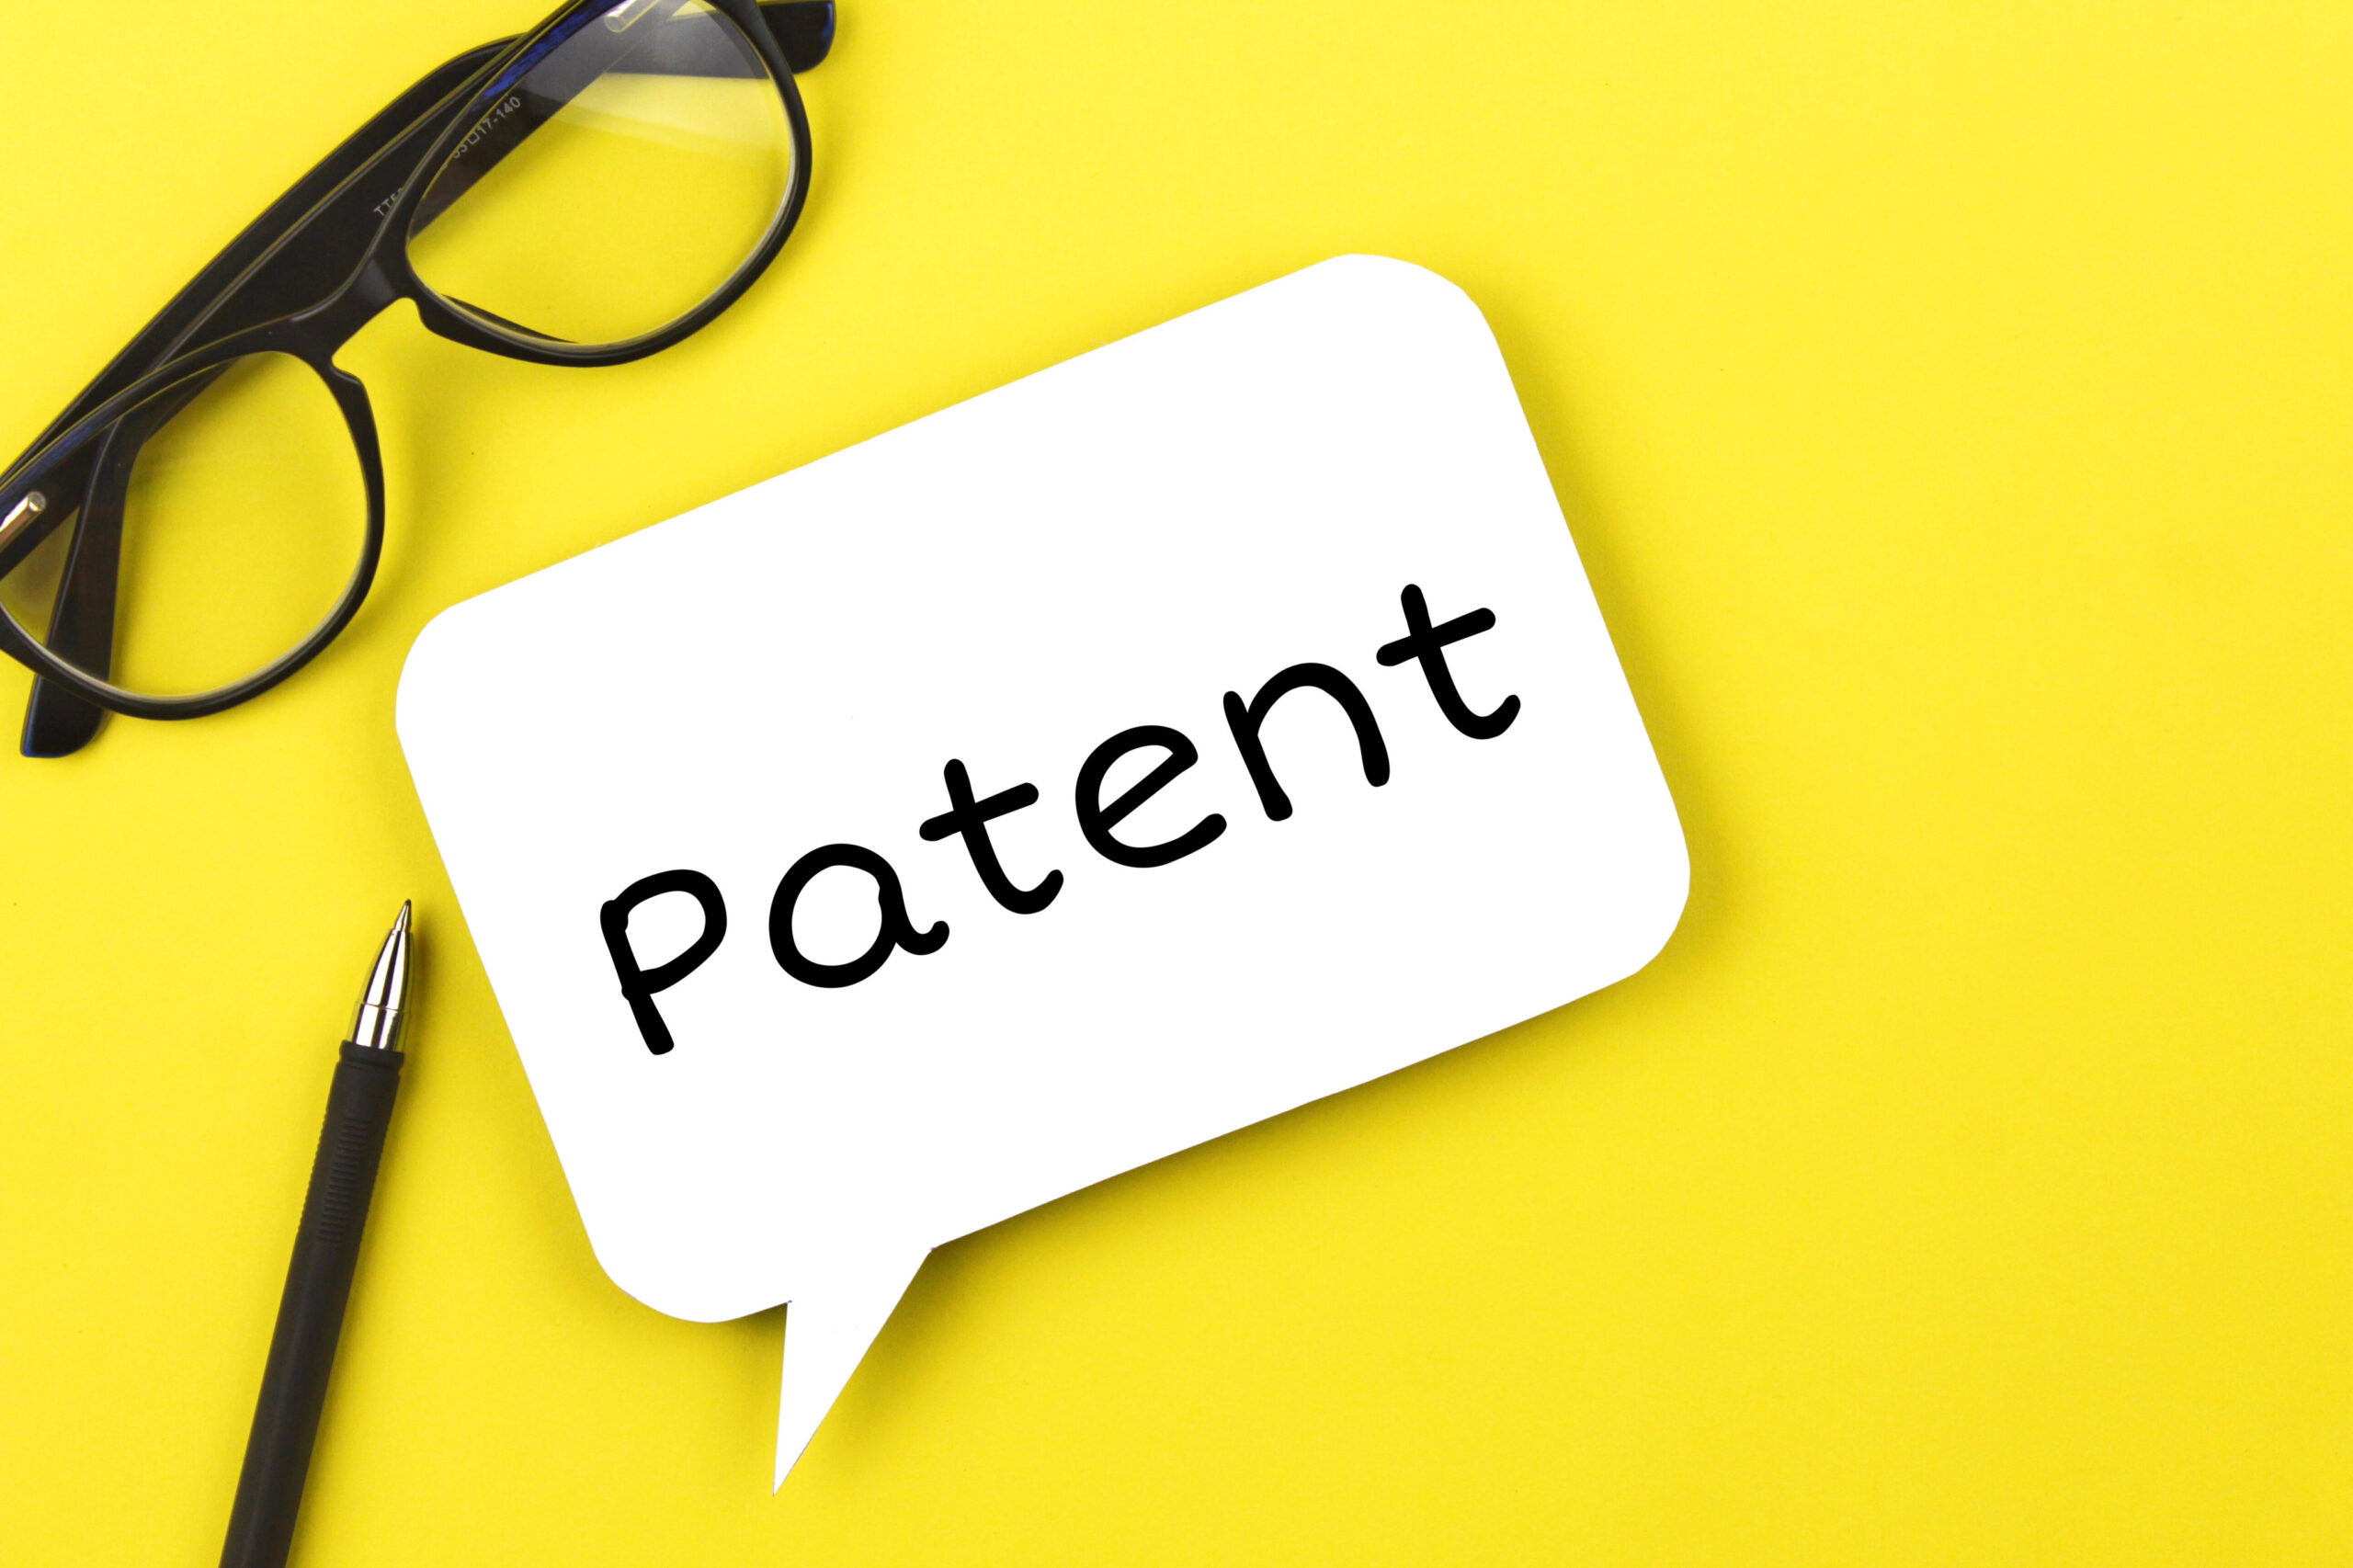 IP Basics: Patents, Trade Secrets, Enabled Publications